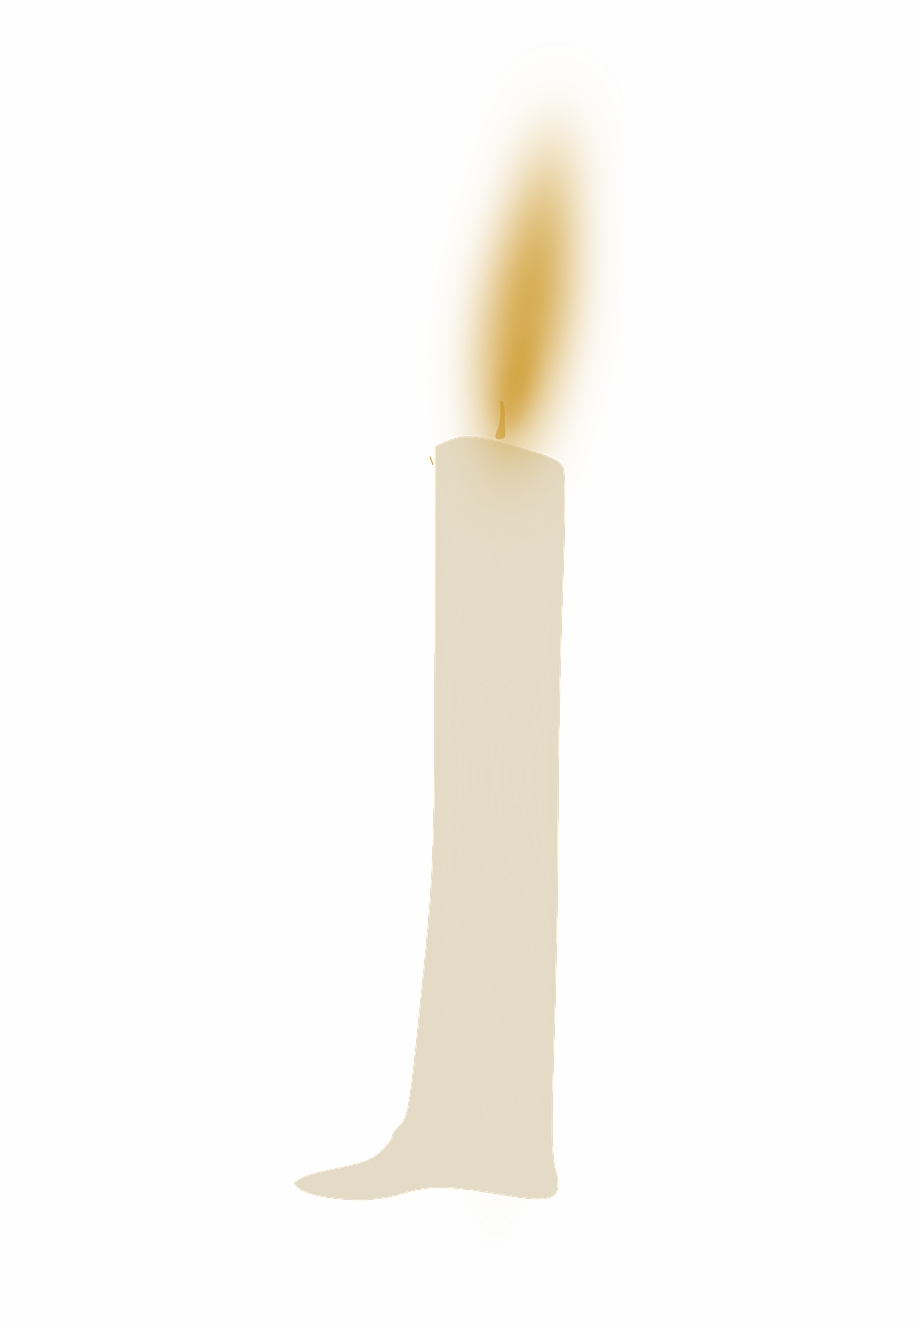 Candle Flame Buddha Buddhism